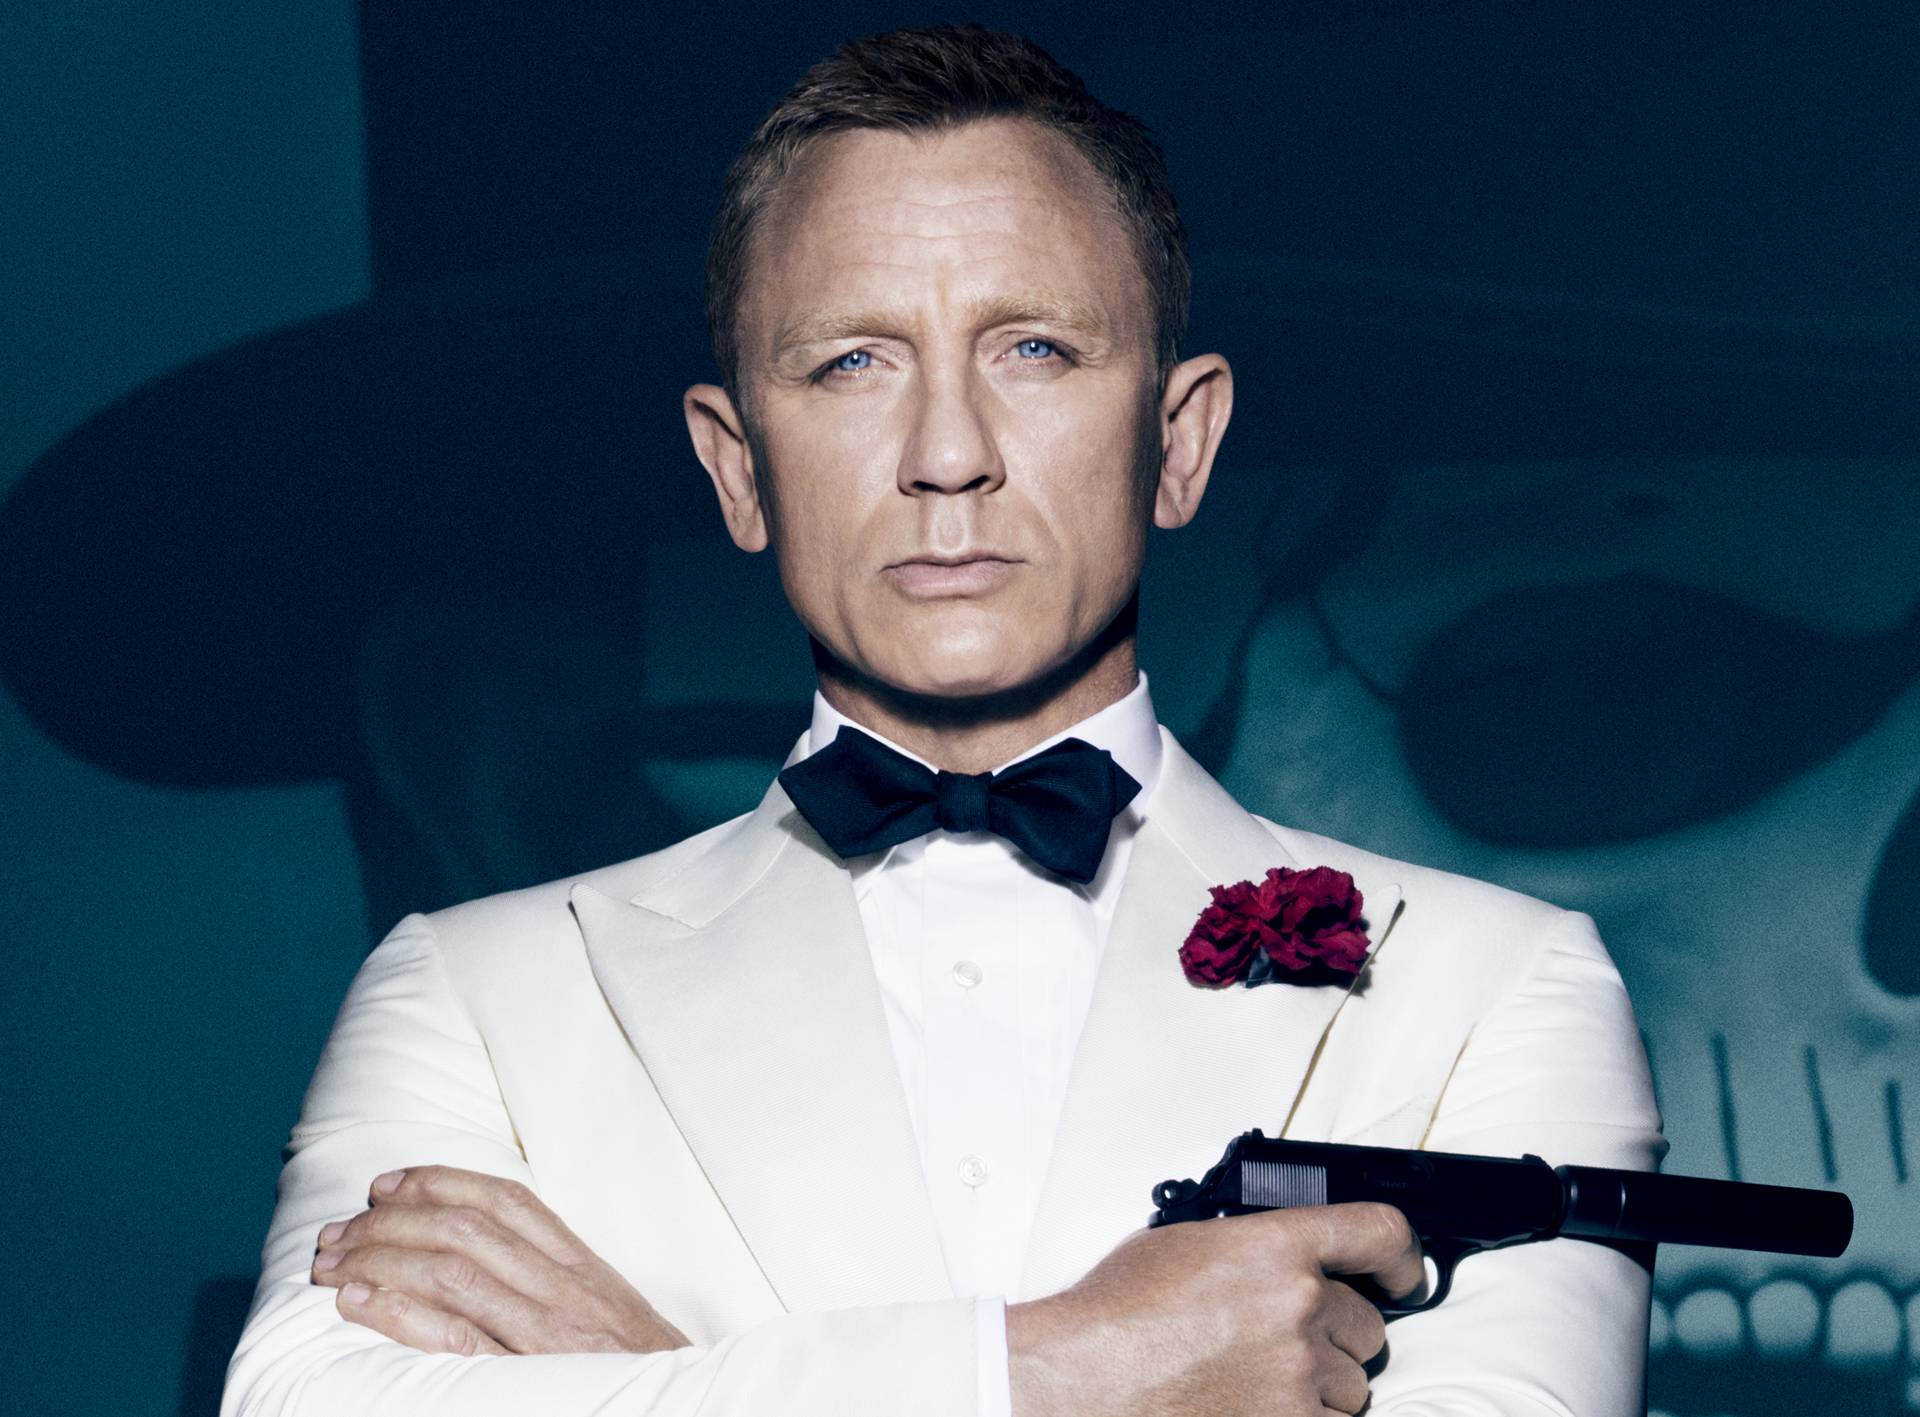 James Bond Films Return To Cinemas